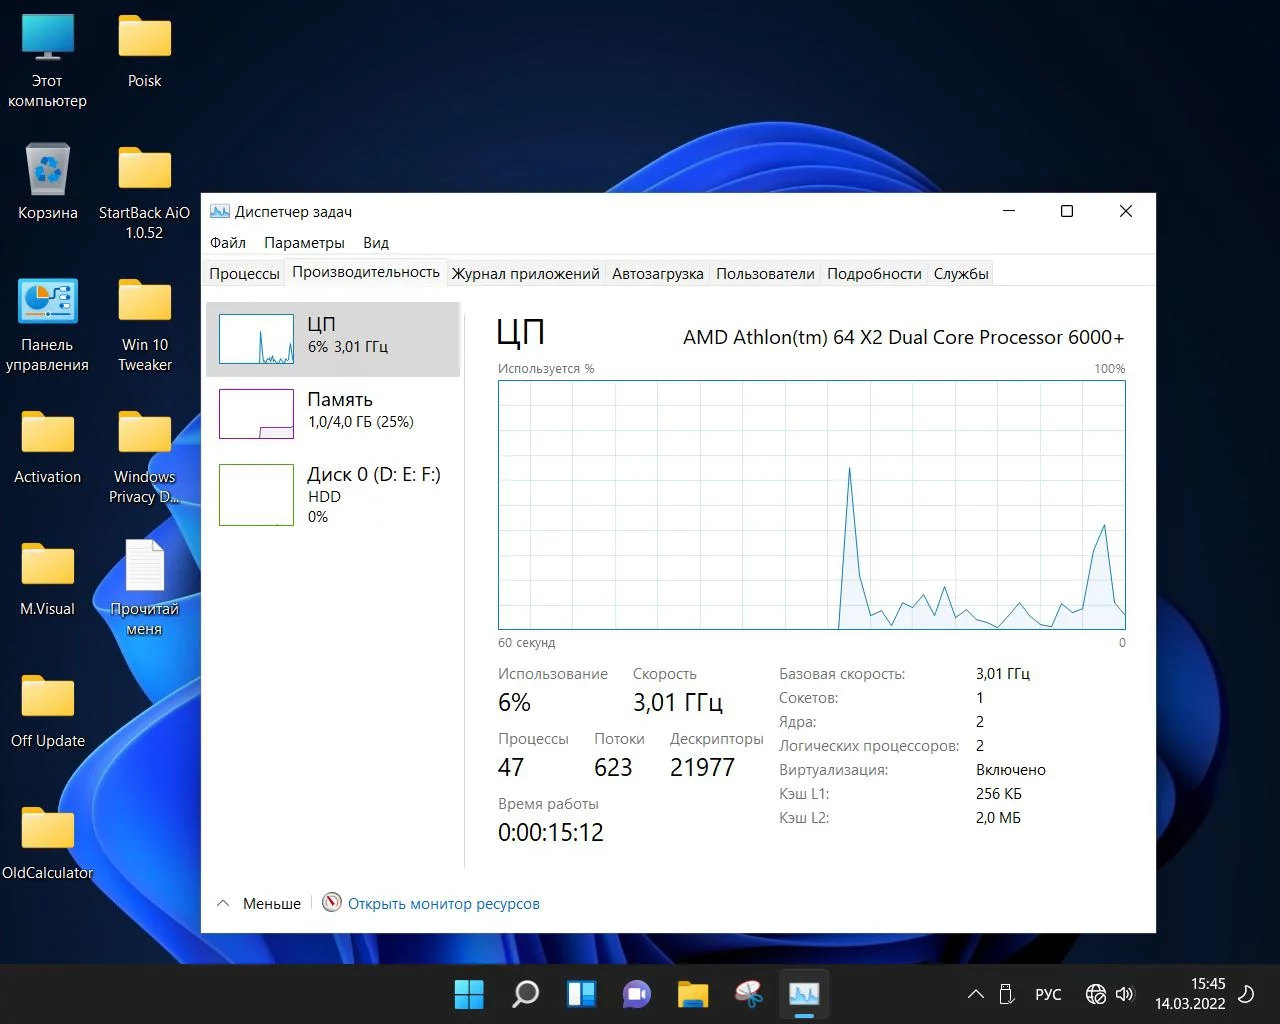 Windows 11 Pro For WS x64 Micro 21H2 build 22000.556 by Zosma